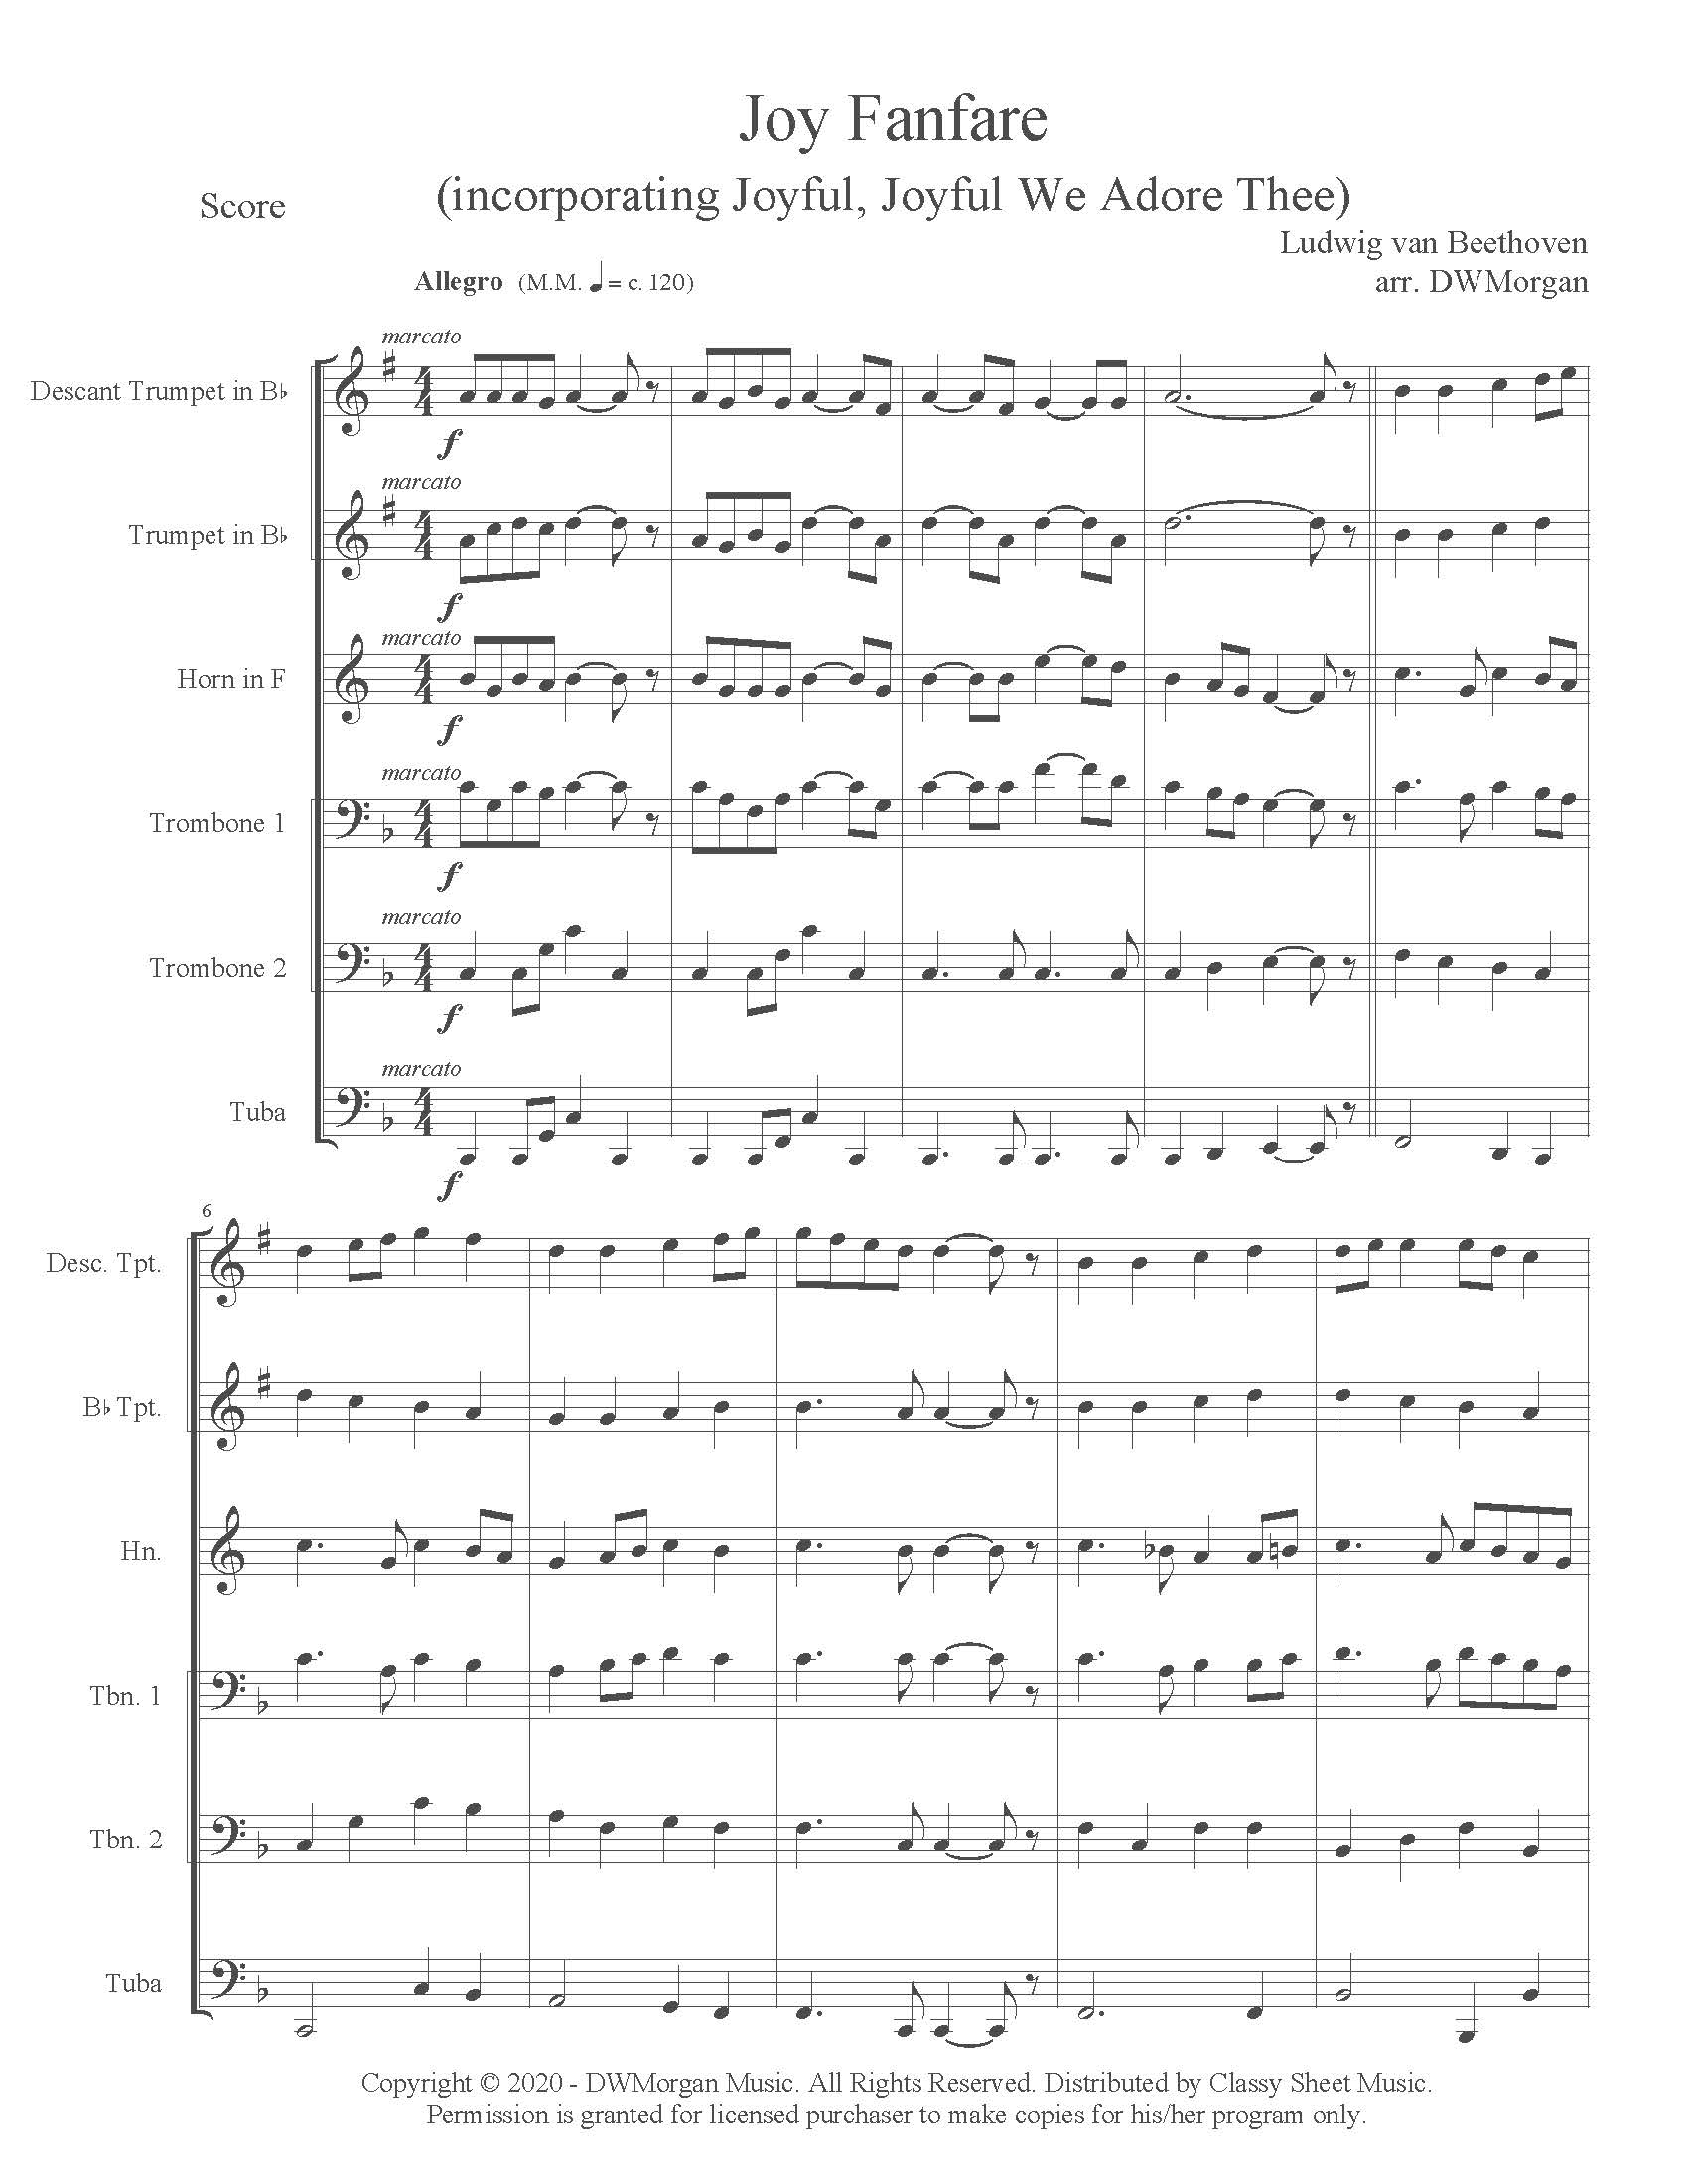 Brass Ensemble - Joy Fanfare from Brass Fanfares And Introits